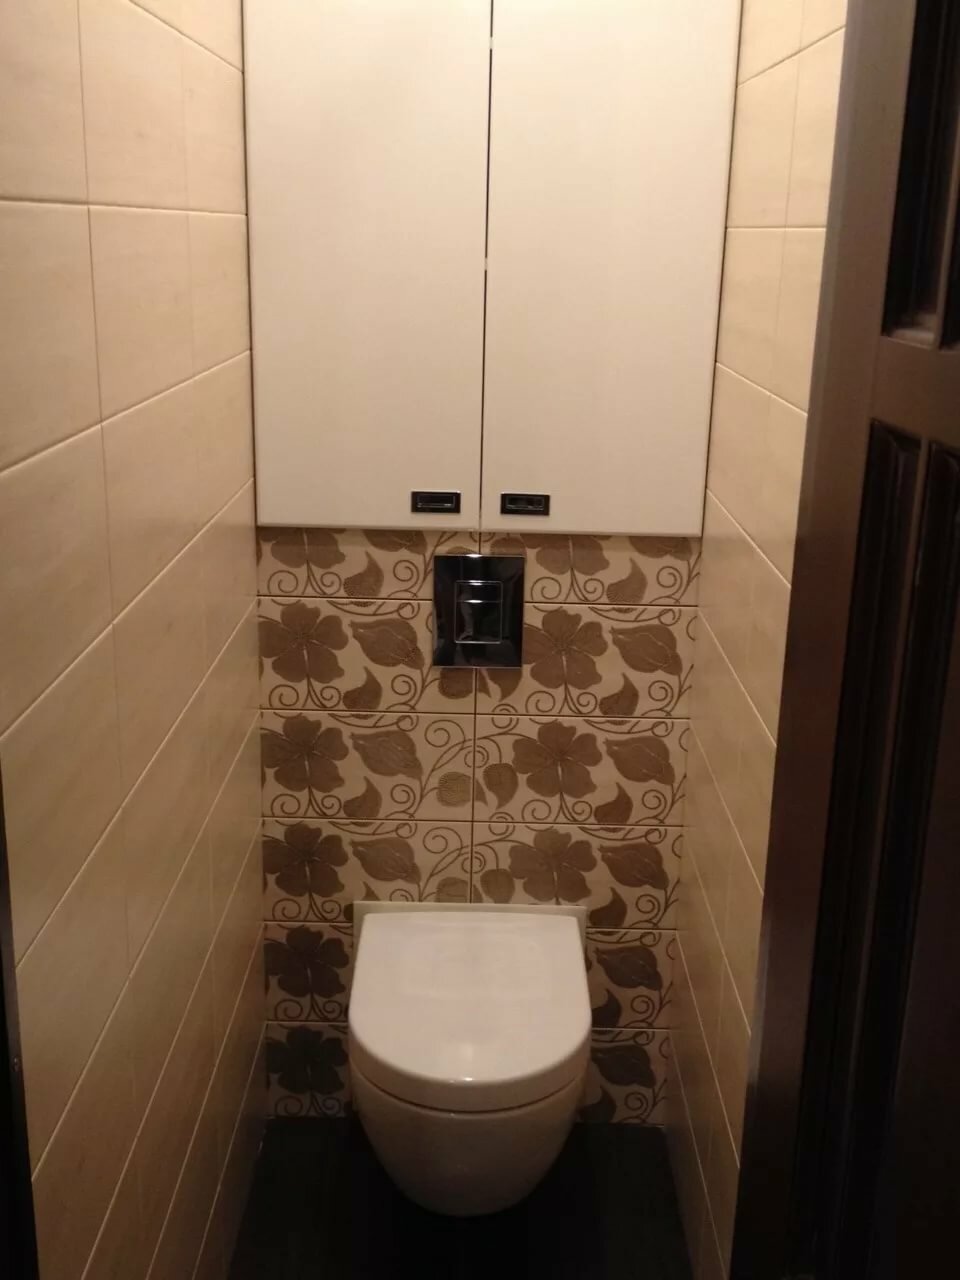 Шкафчик в туалете над унитазом своими руками